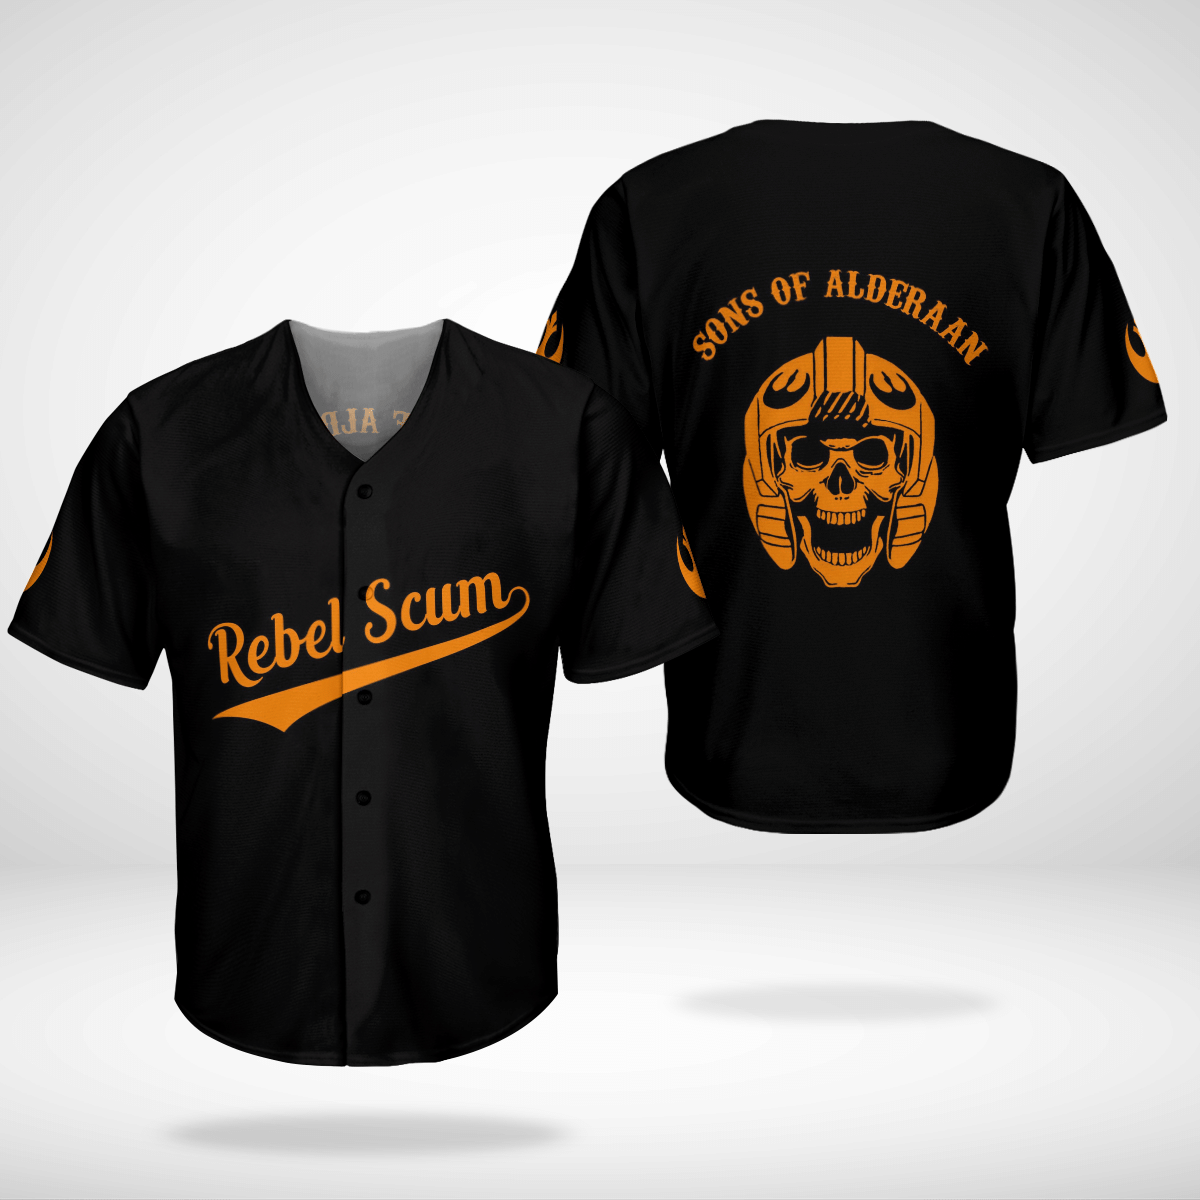 Rebel Scurm son of Alderran baseball shirt